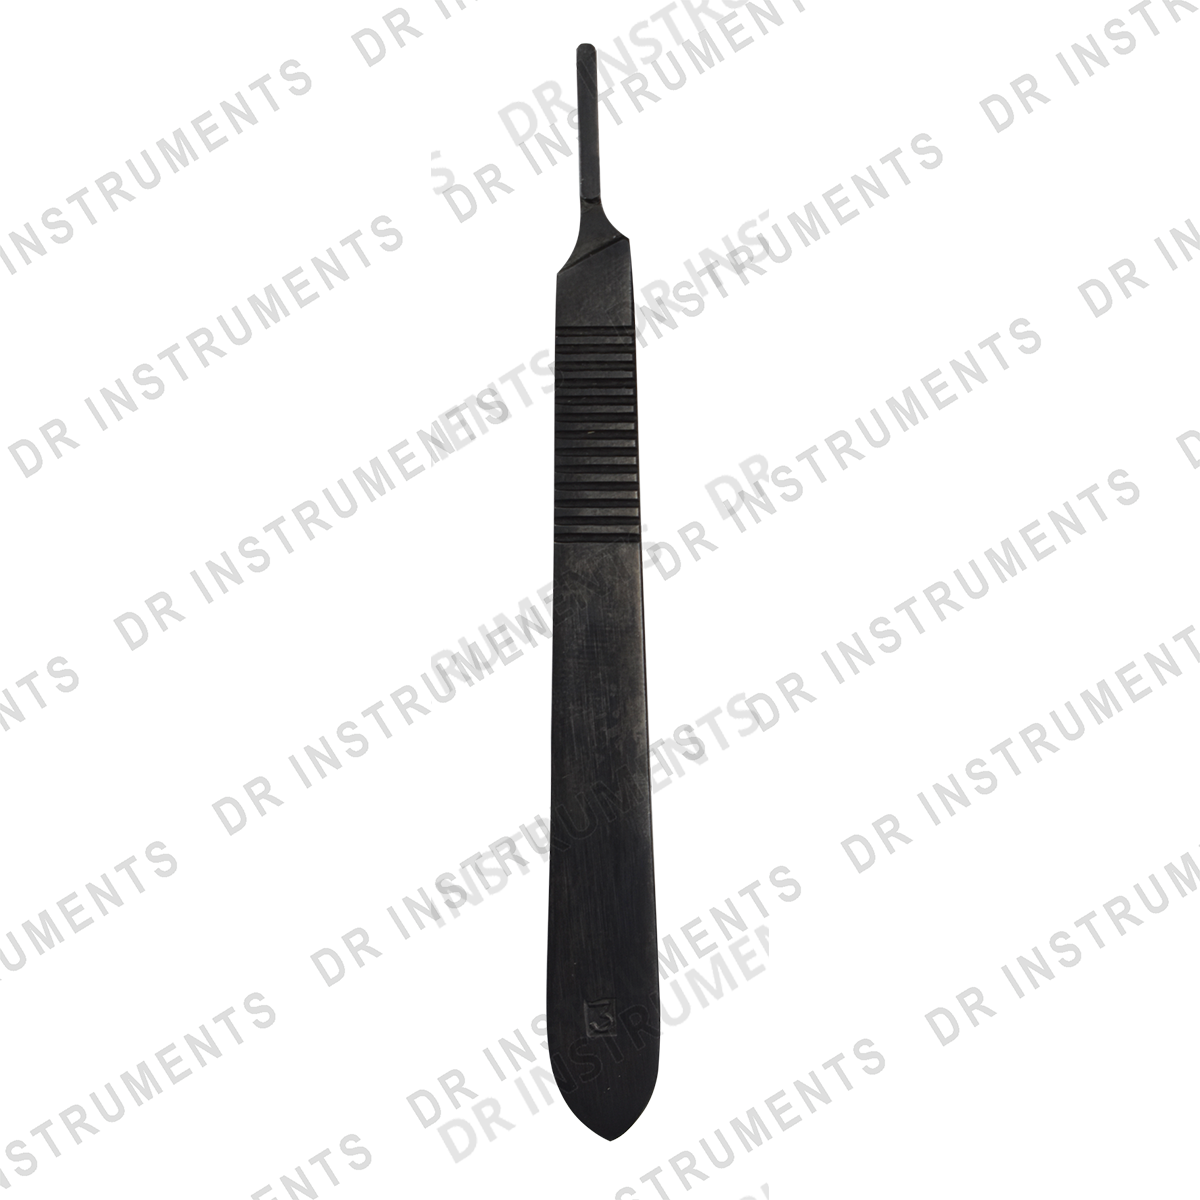 Scalpel Handle No. 3 - Black Oxide - Scalpel Blade - DR Instruments